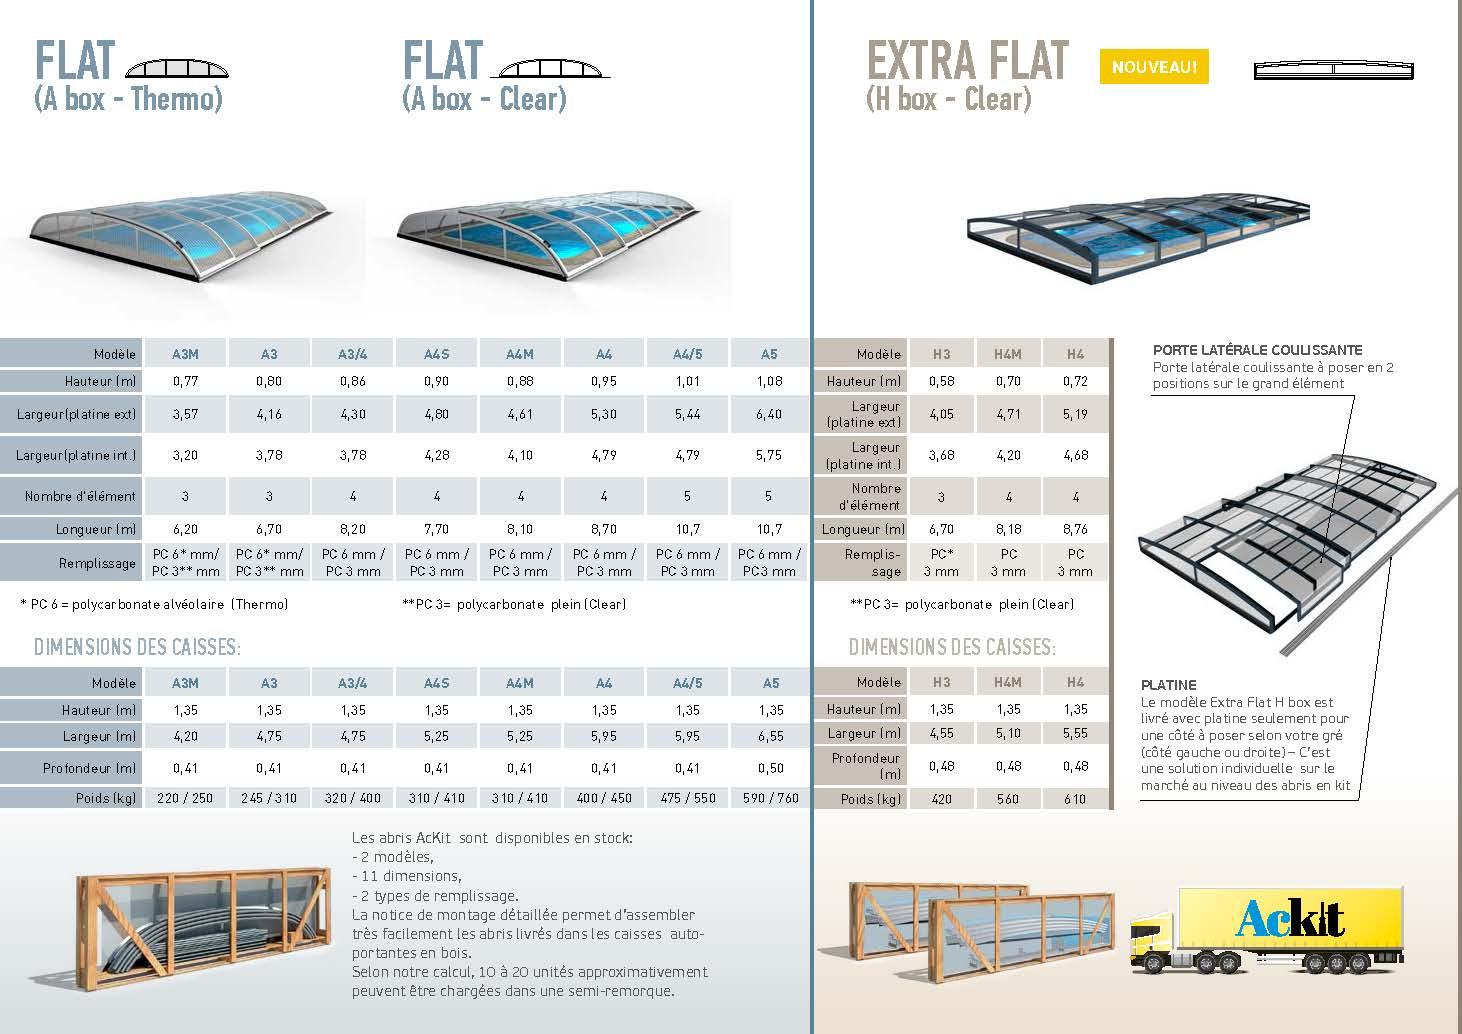 Zenith Flat - Ackit A4 Dimensions : 8,70 x 5,30 x 0,95 mm